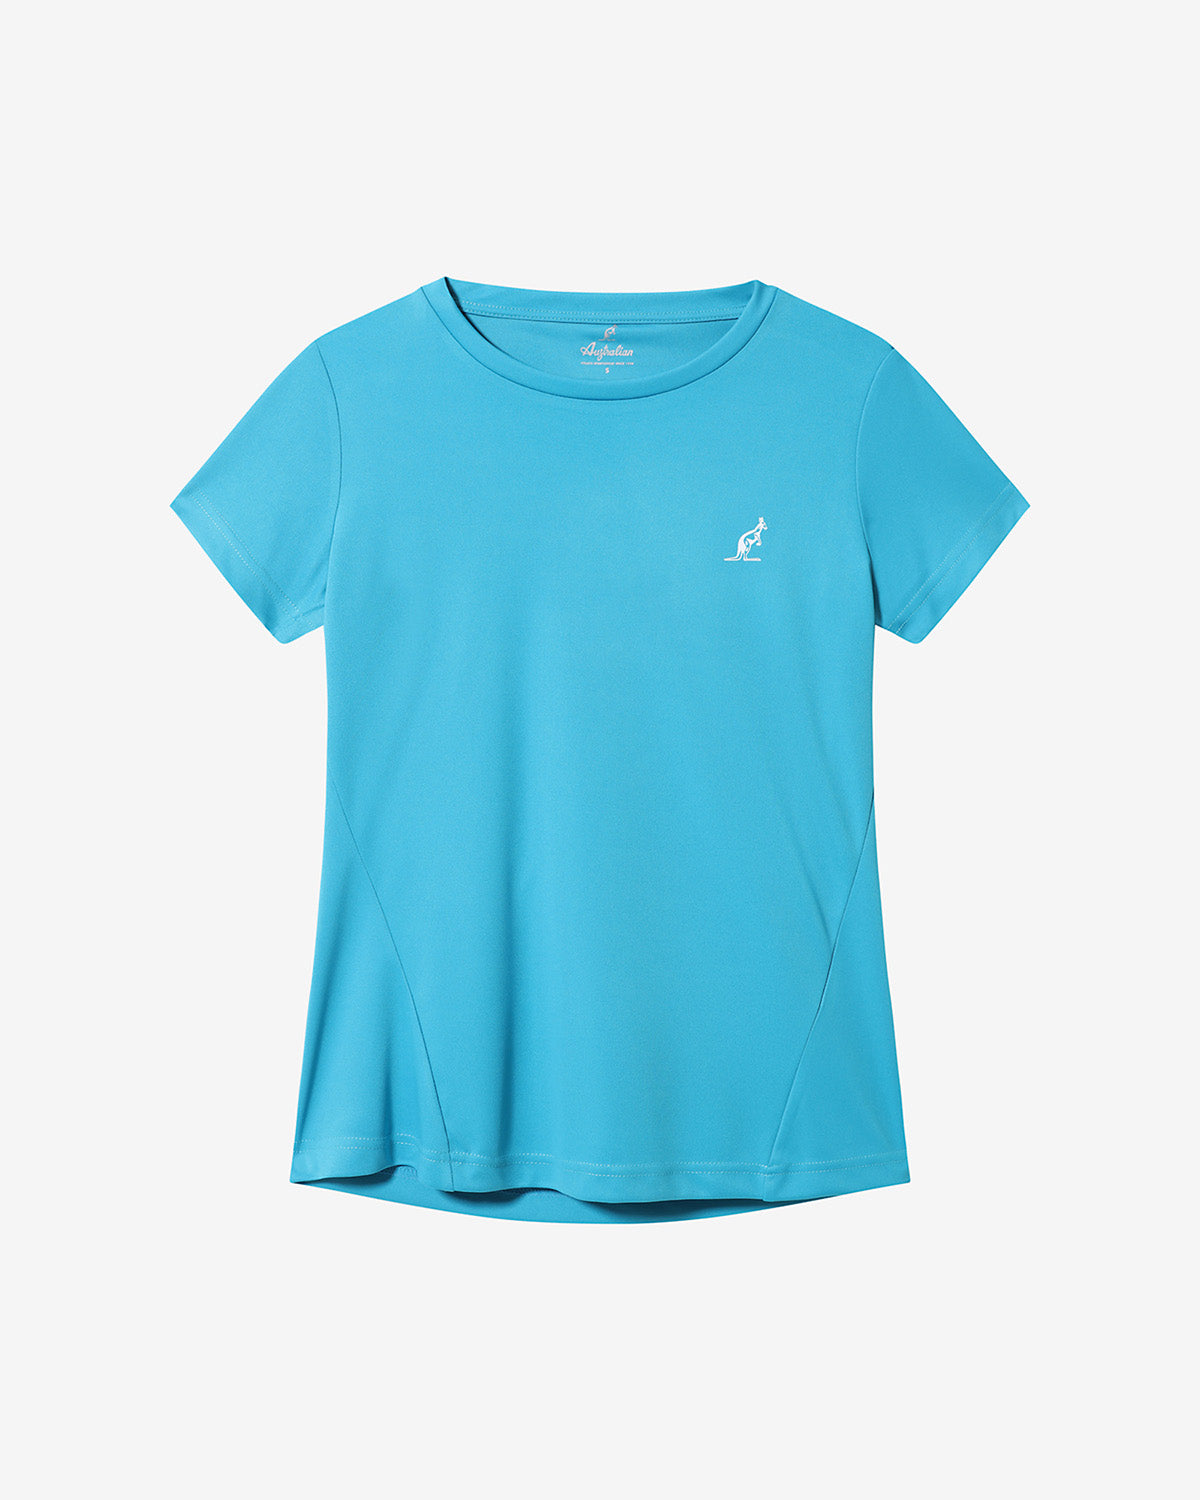 Basic Ace T-shirt: Australian Tennis